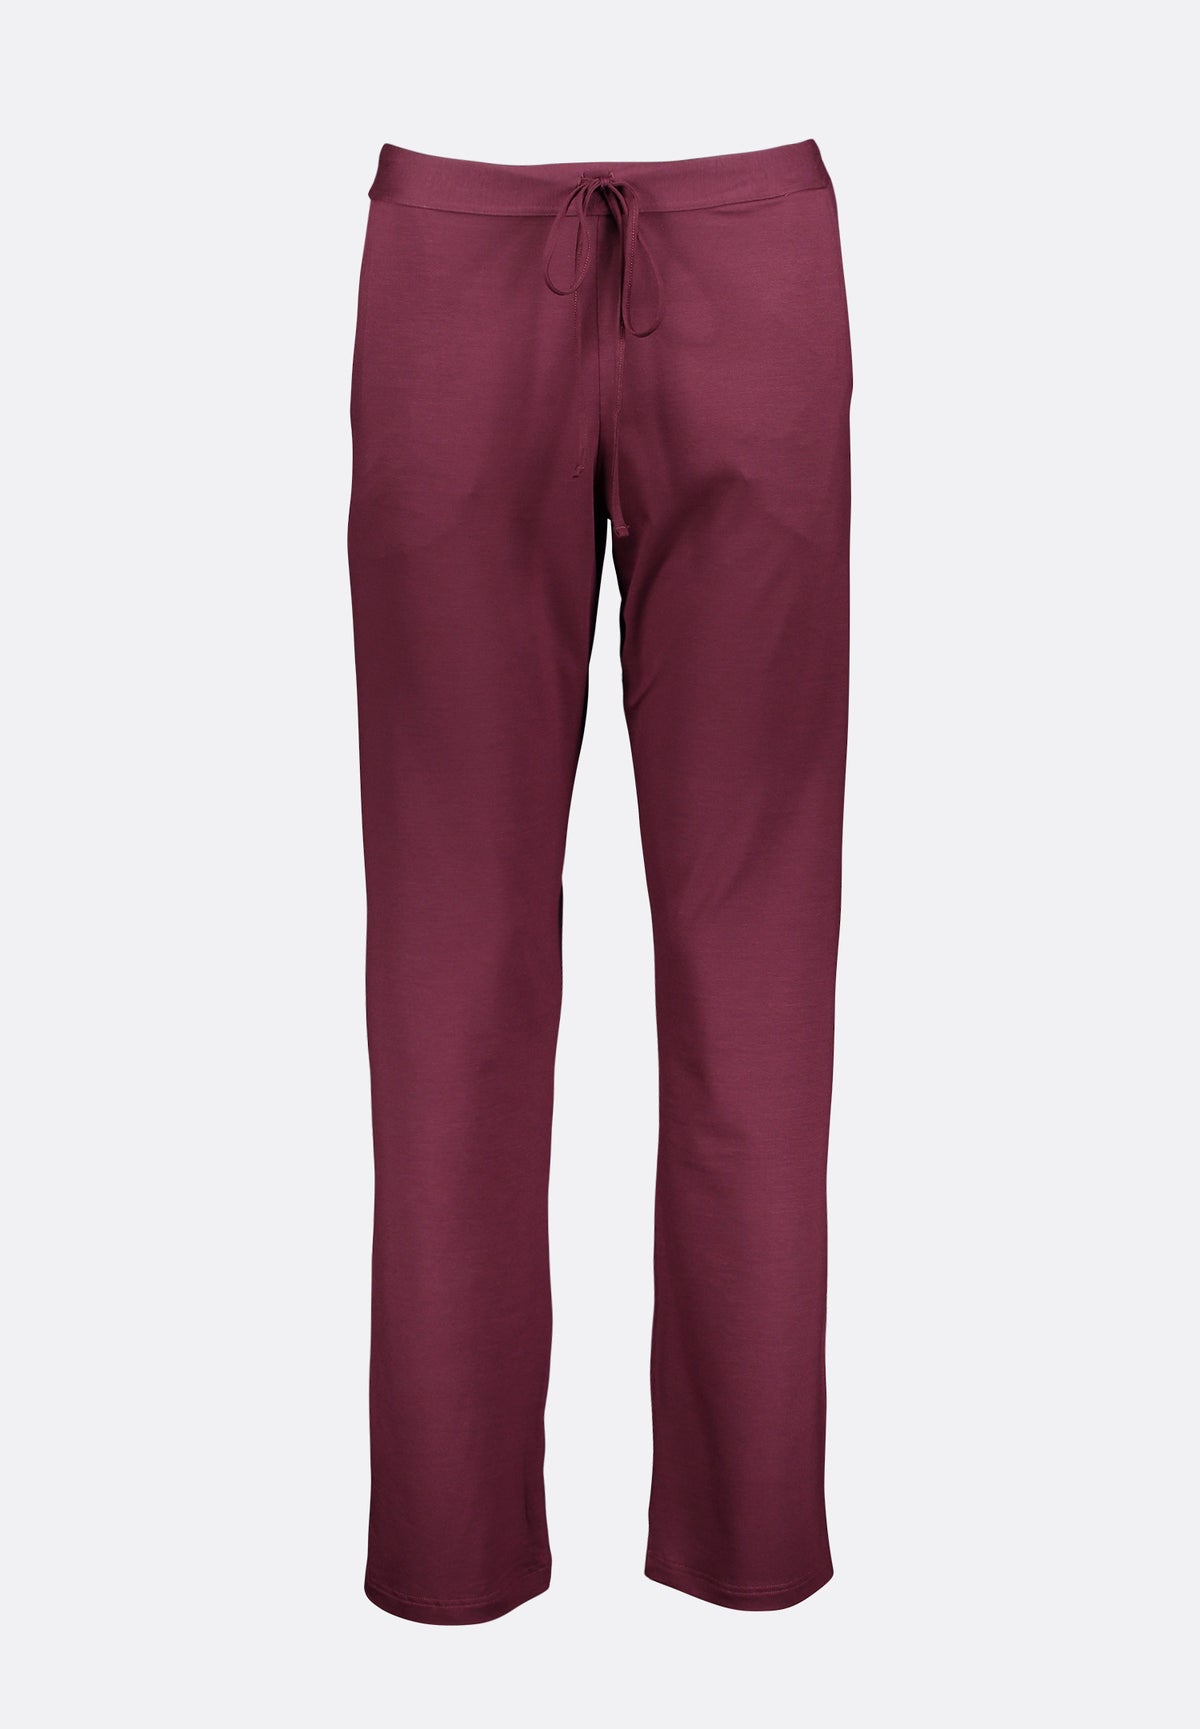 Pureness | 700 Pureness Pants Long - burgundy red